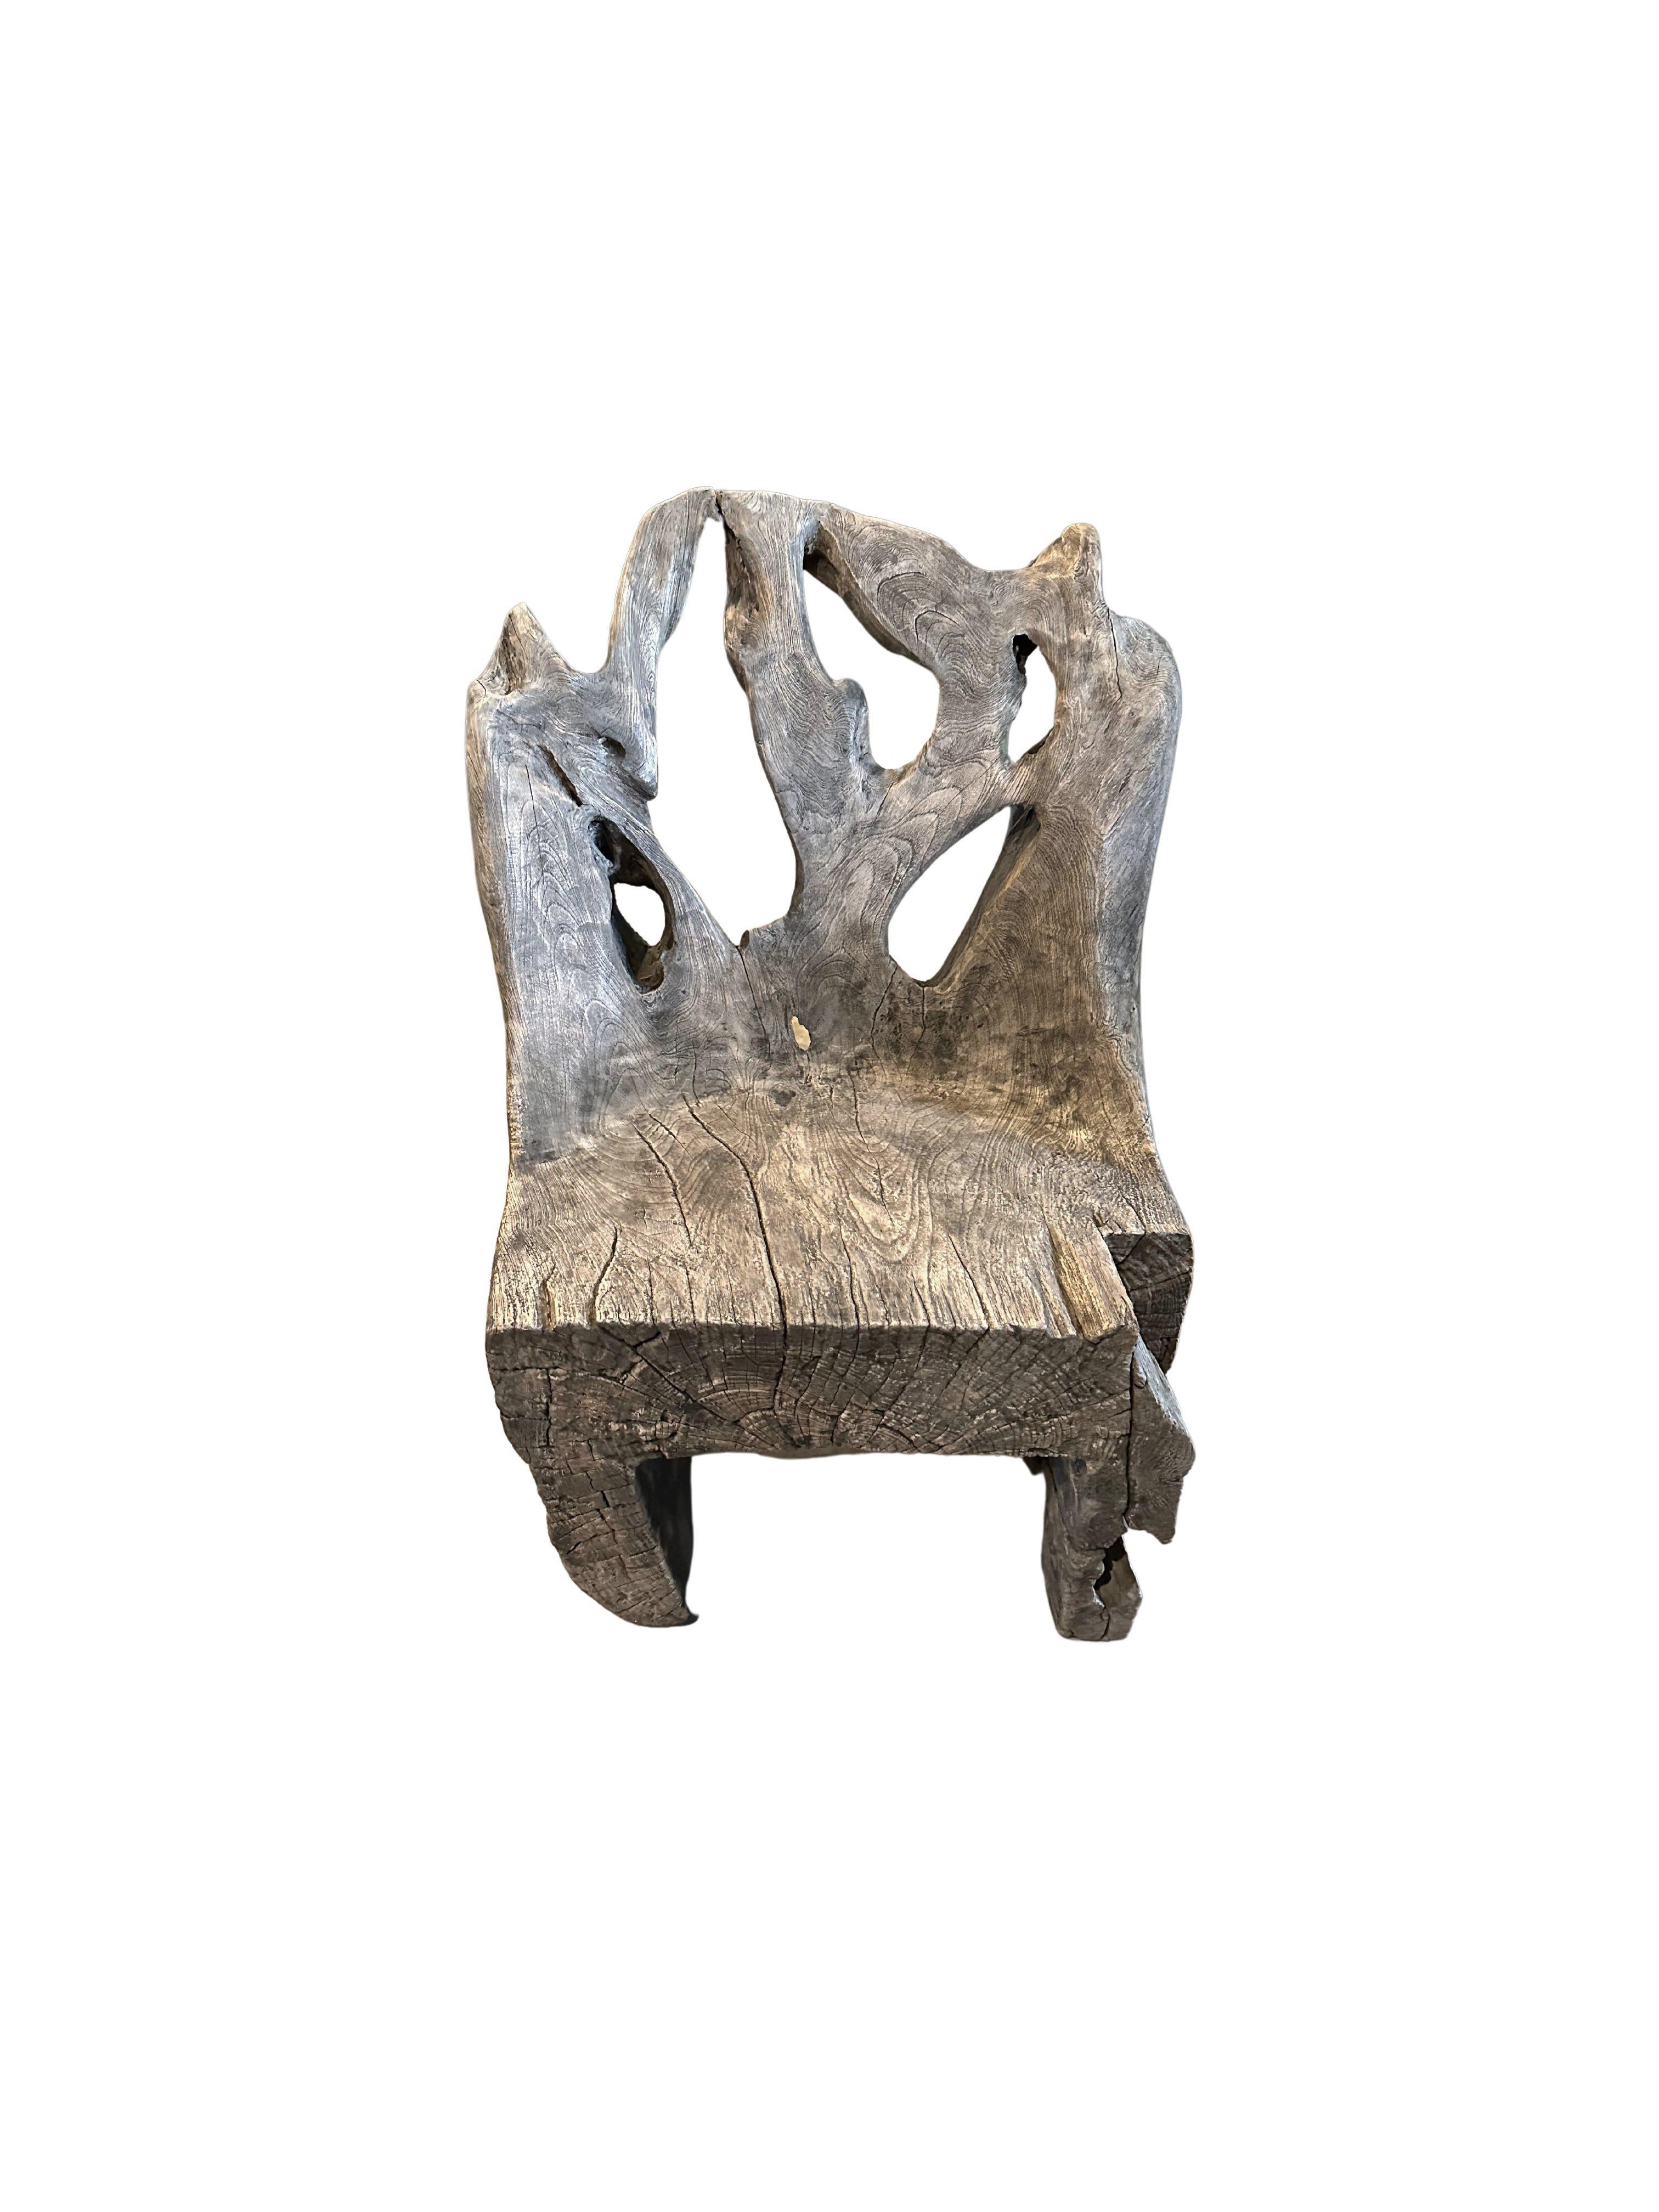 Indonesian Sculptural Teak Wood Chair, Java, Indonesia, C. 1950